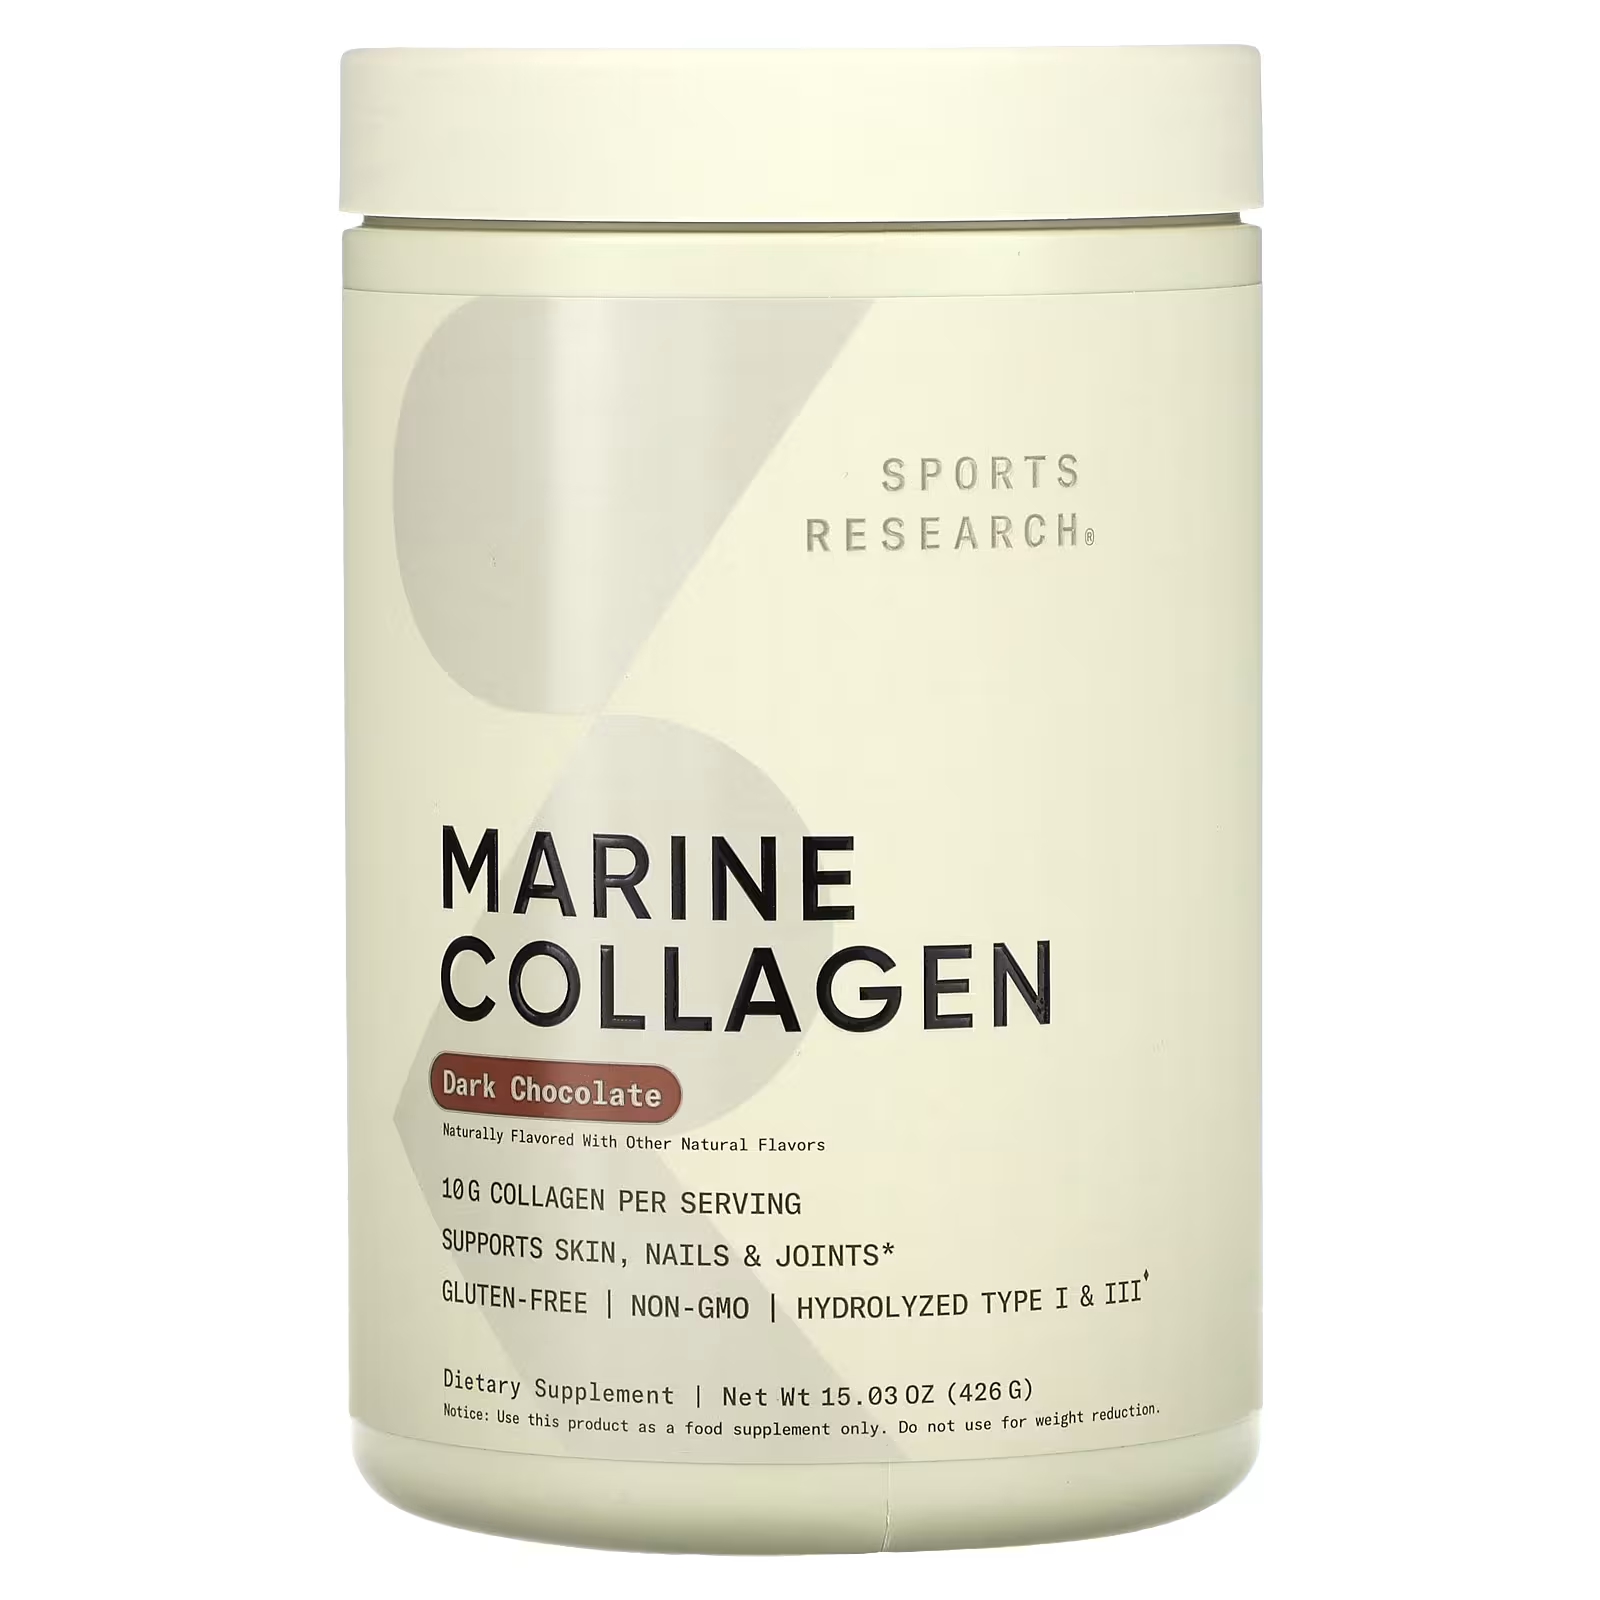 Sports Research Морской коллаген Темный шоколад 15,03 унции (426 г) sports research комплекс collagen beauty морской коллаген с нейтральным вкусом 163 г 5 75 унций